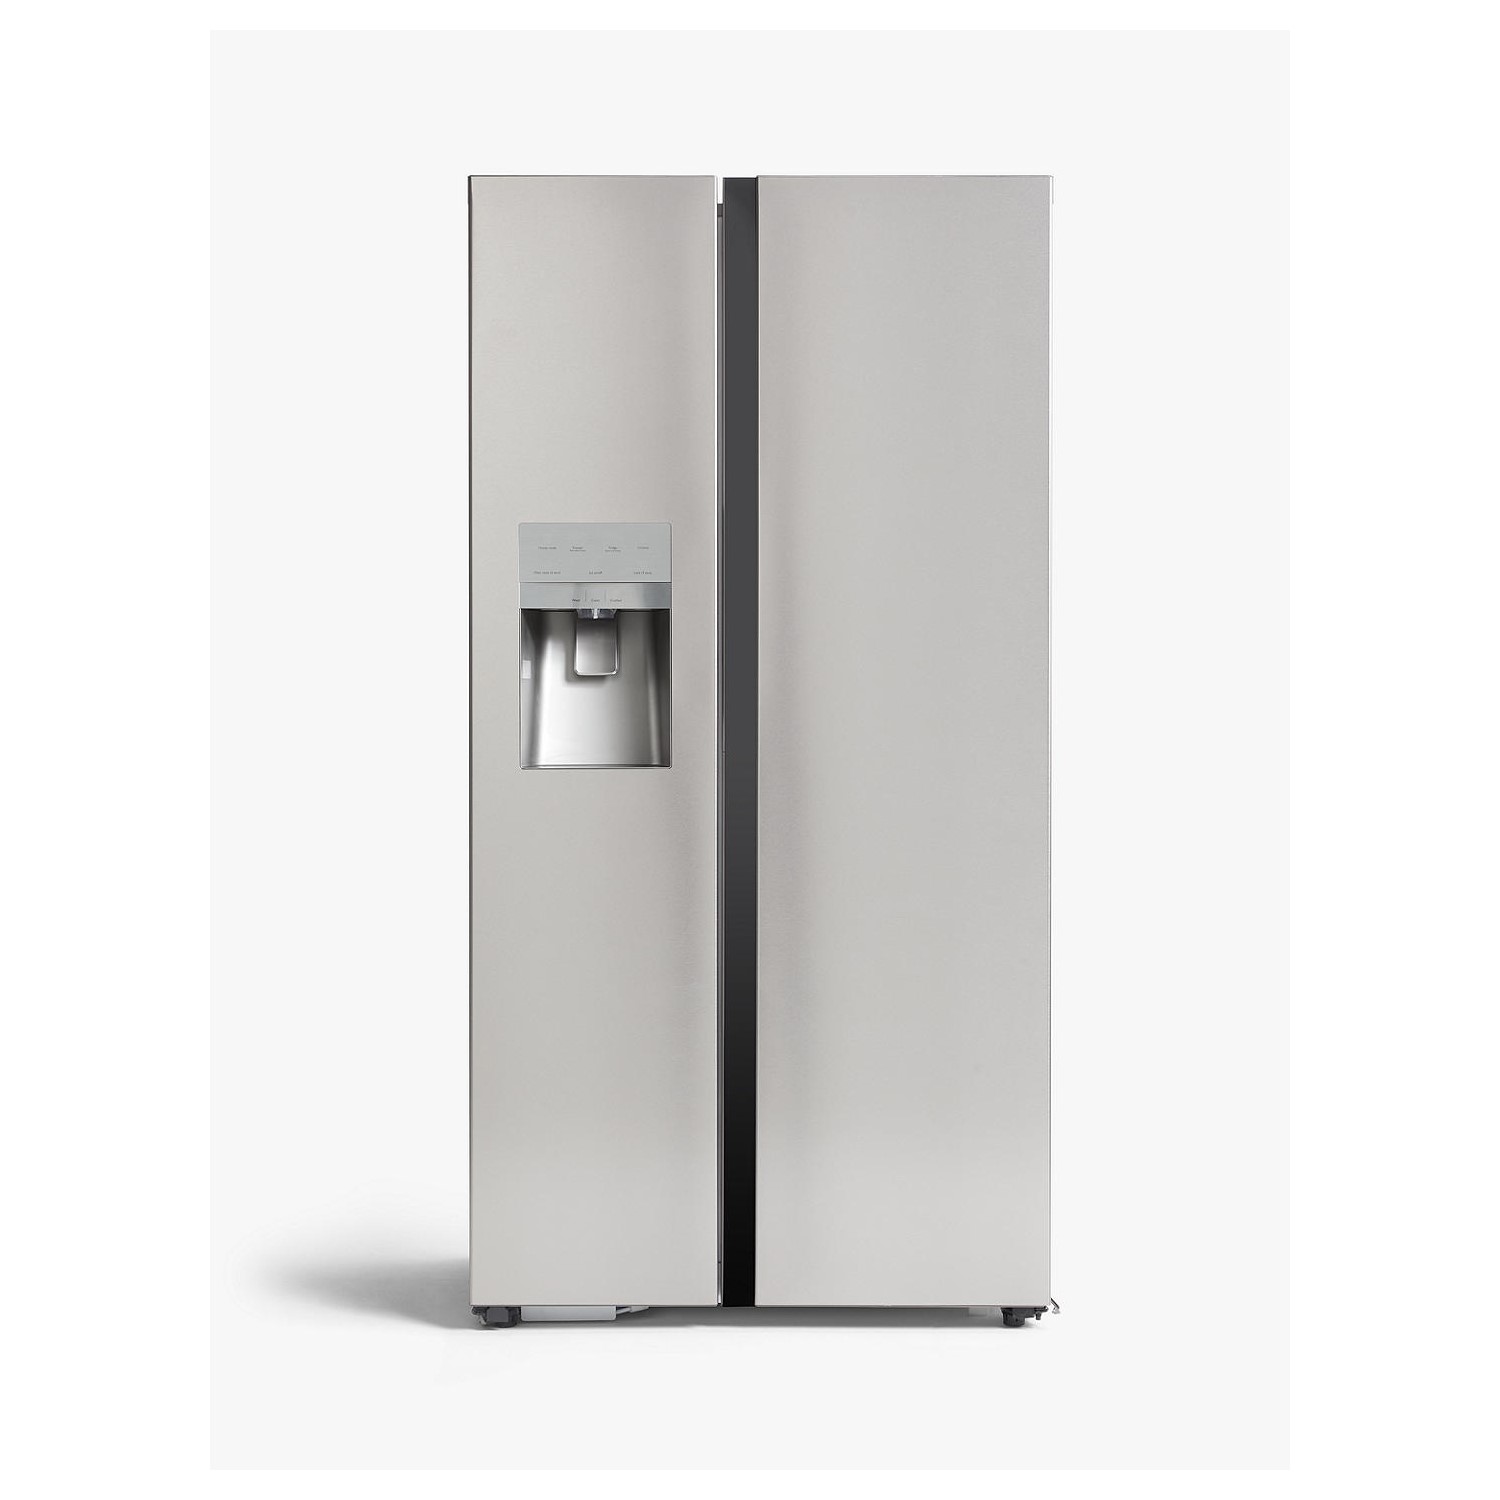 Refurbished Major Brand JLAFFSS9018 Freestanding 540 litre 65/35 Fridge Freezer